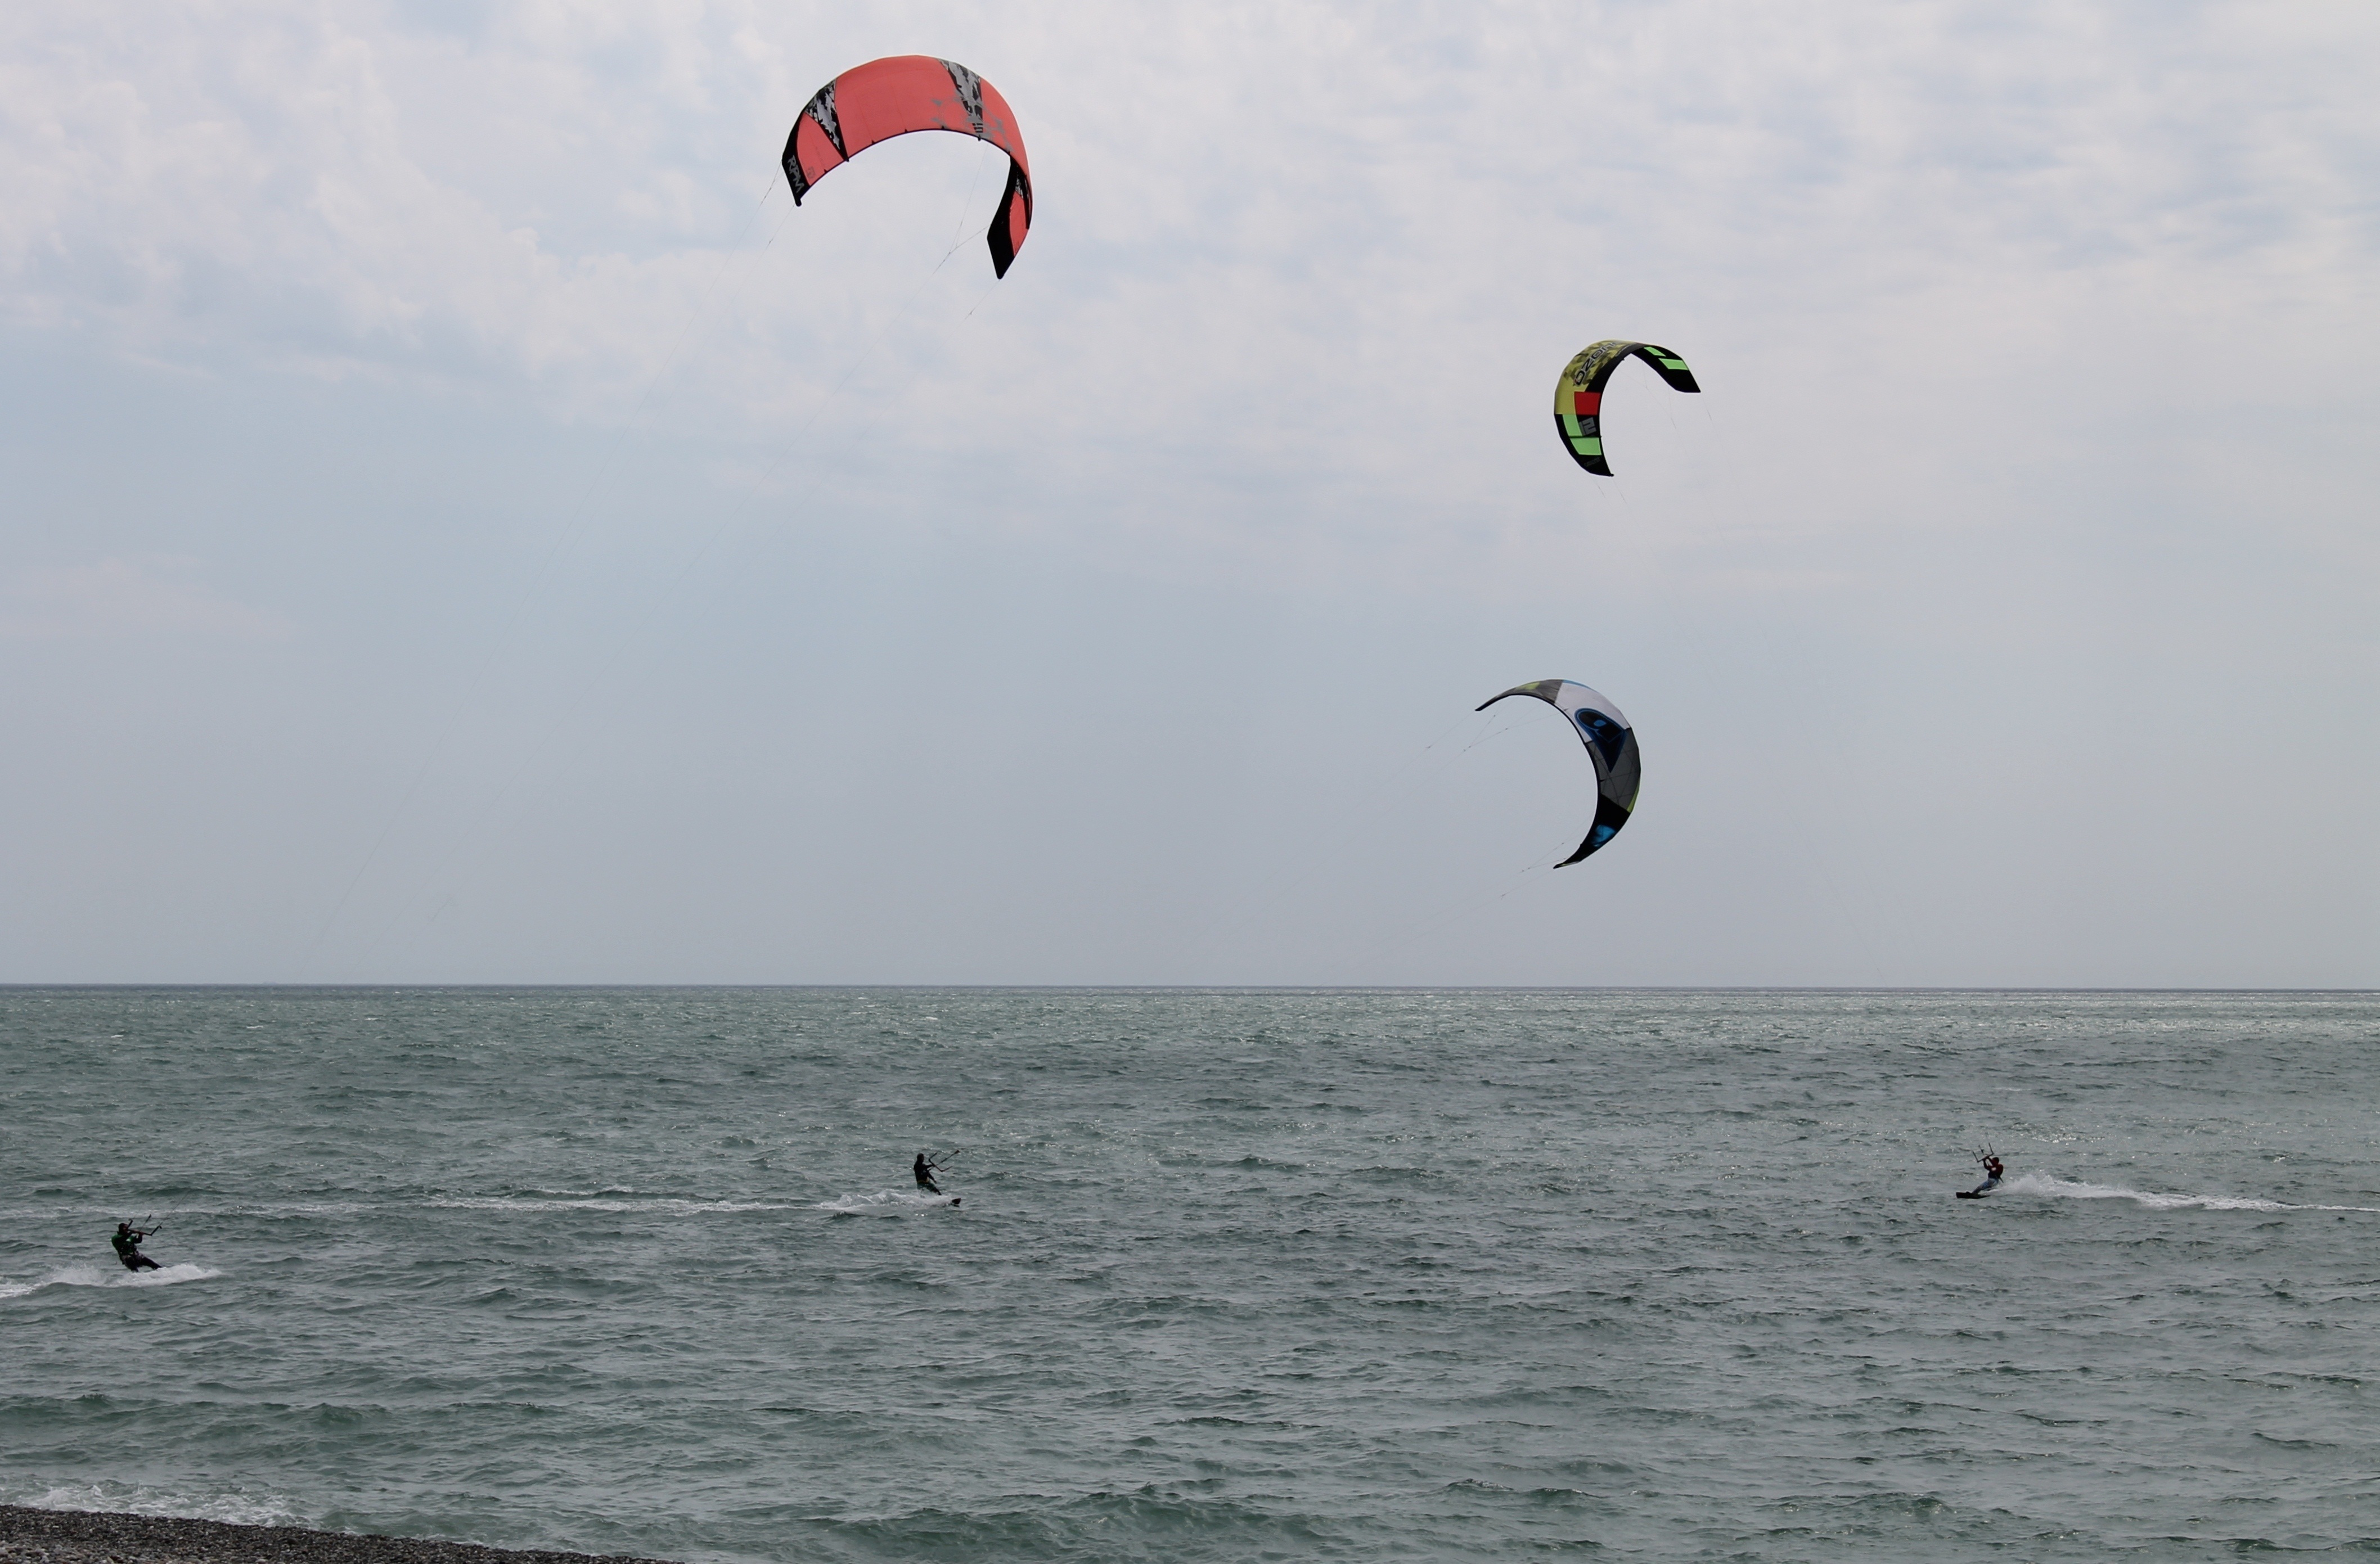 Kitesurfing in Sochi